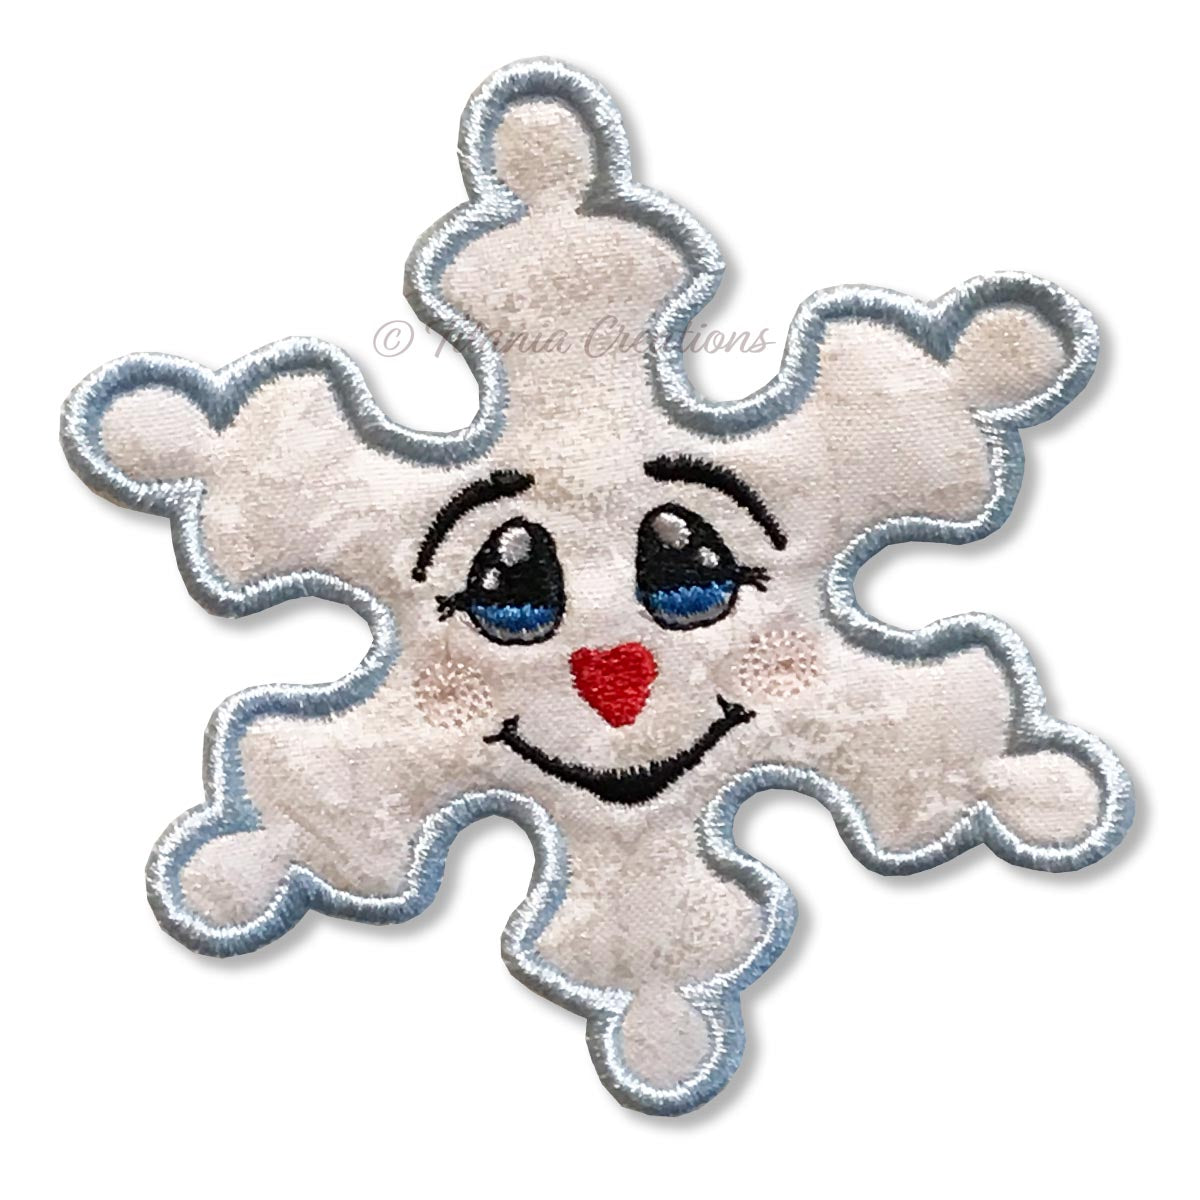 ITH Snowflake Ornament 4x4